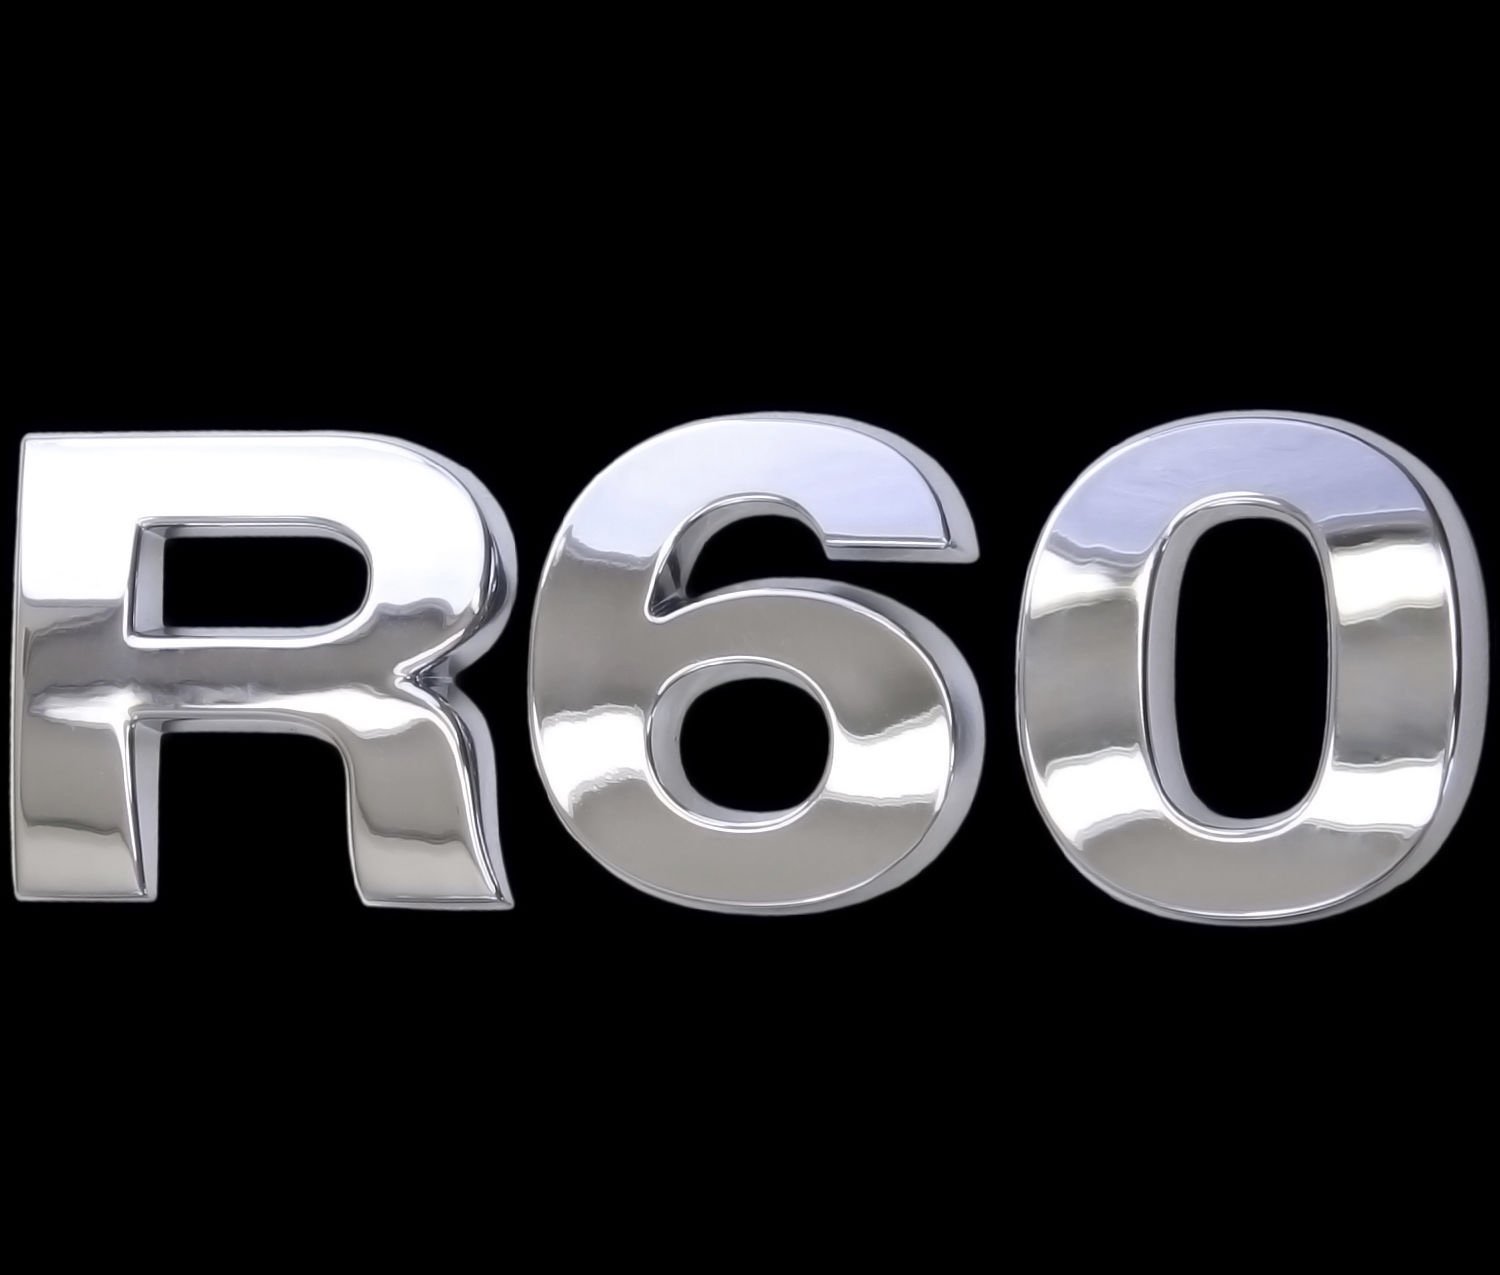 3D Chrom Emblem Aufkleber Logo R60 Tuning Cooper Motor Renn Sport Mini L099 von Recambo